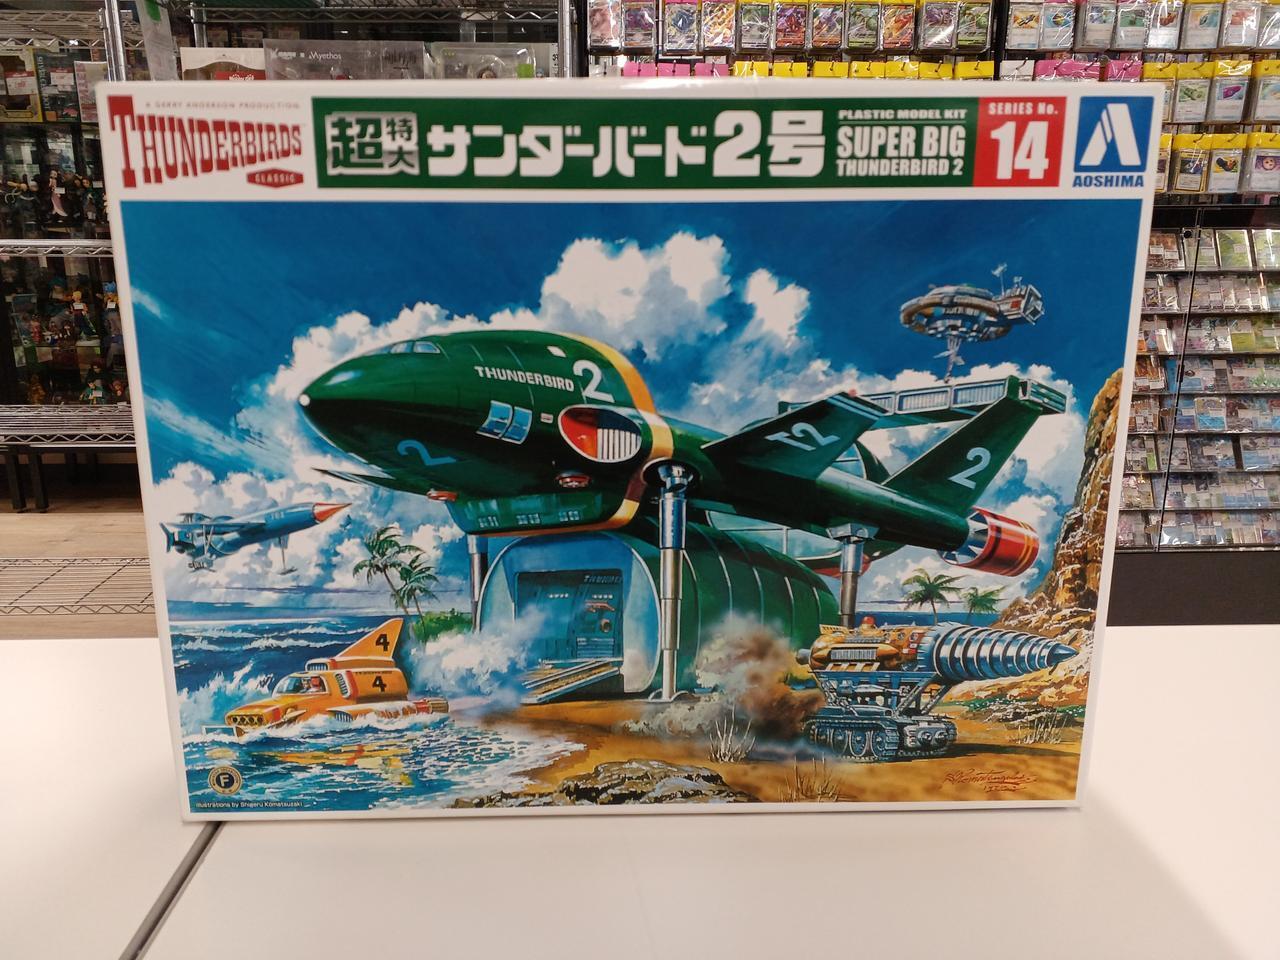 Aoshima Super Extra Large Thunderbird No. 2 Plastic Model